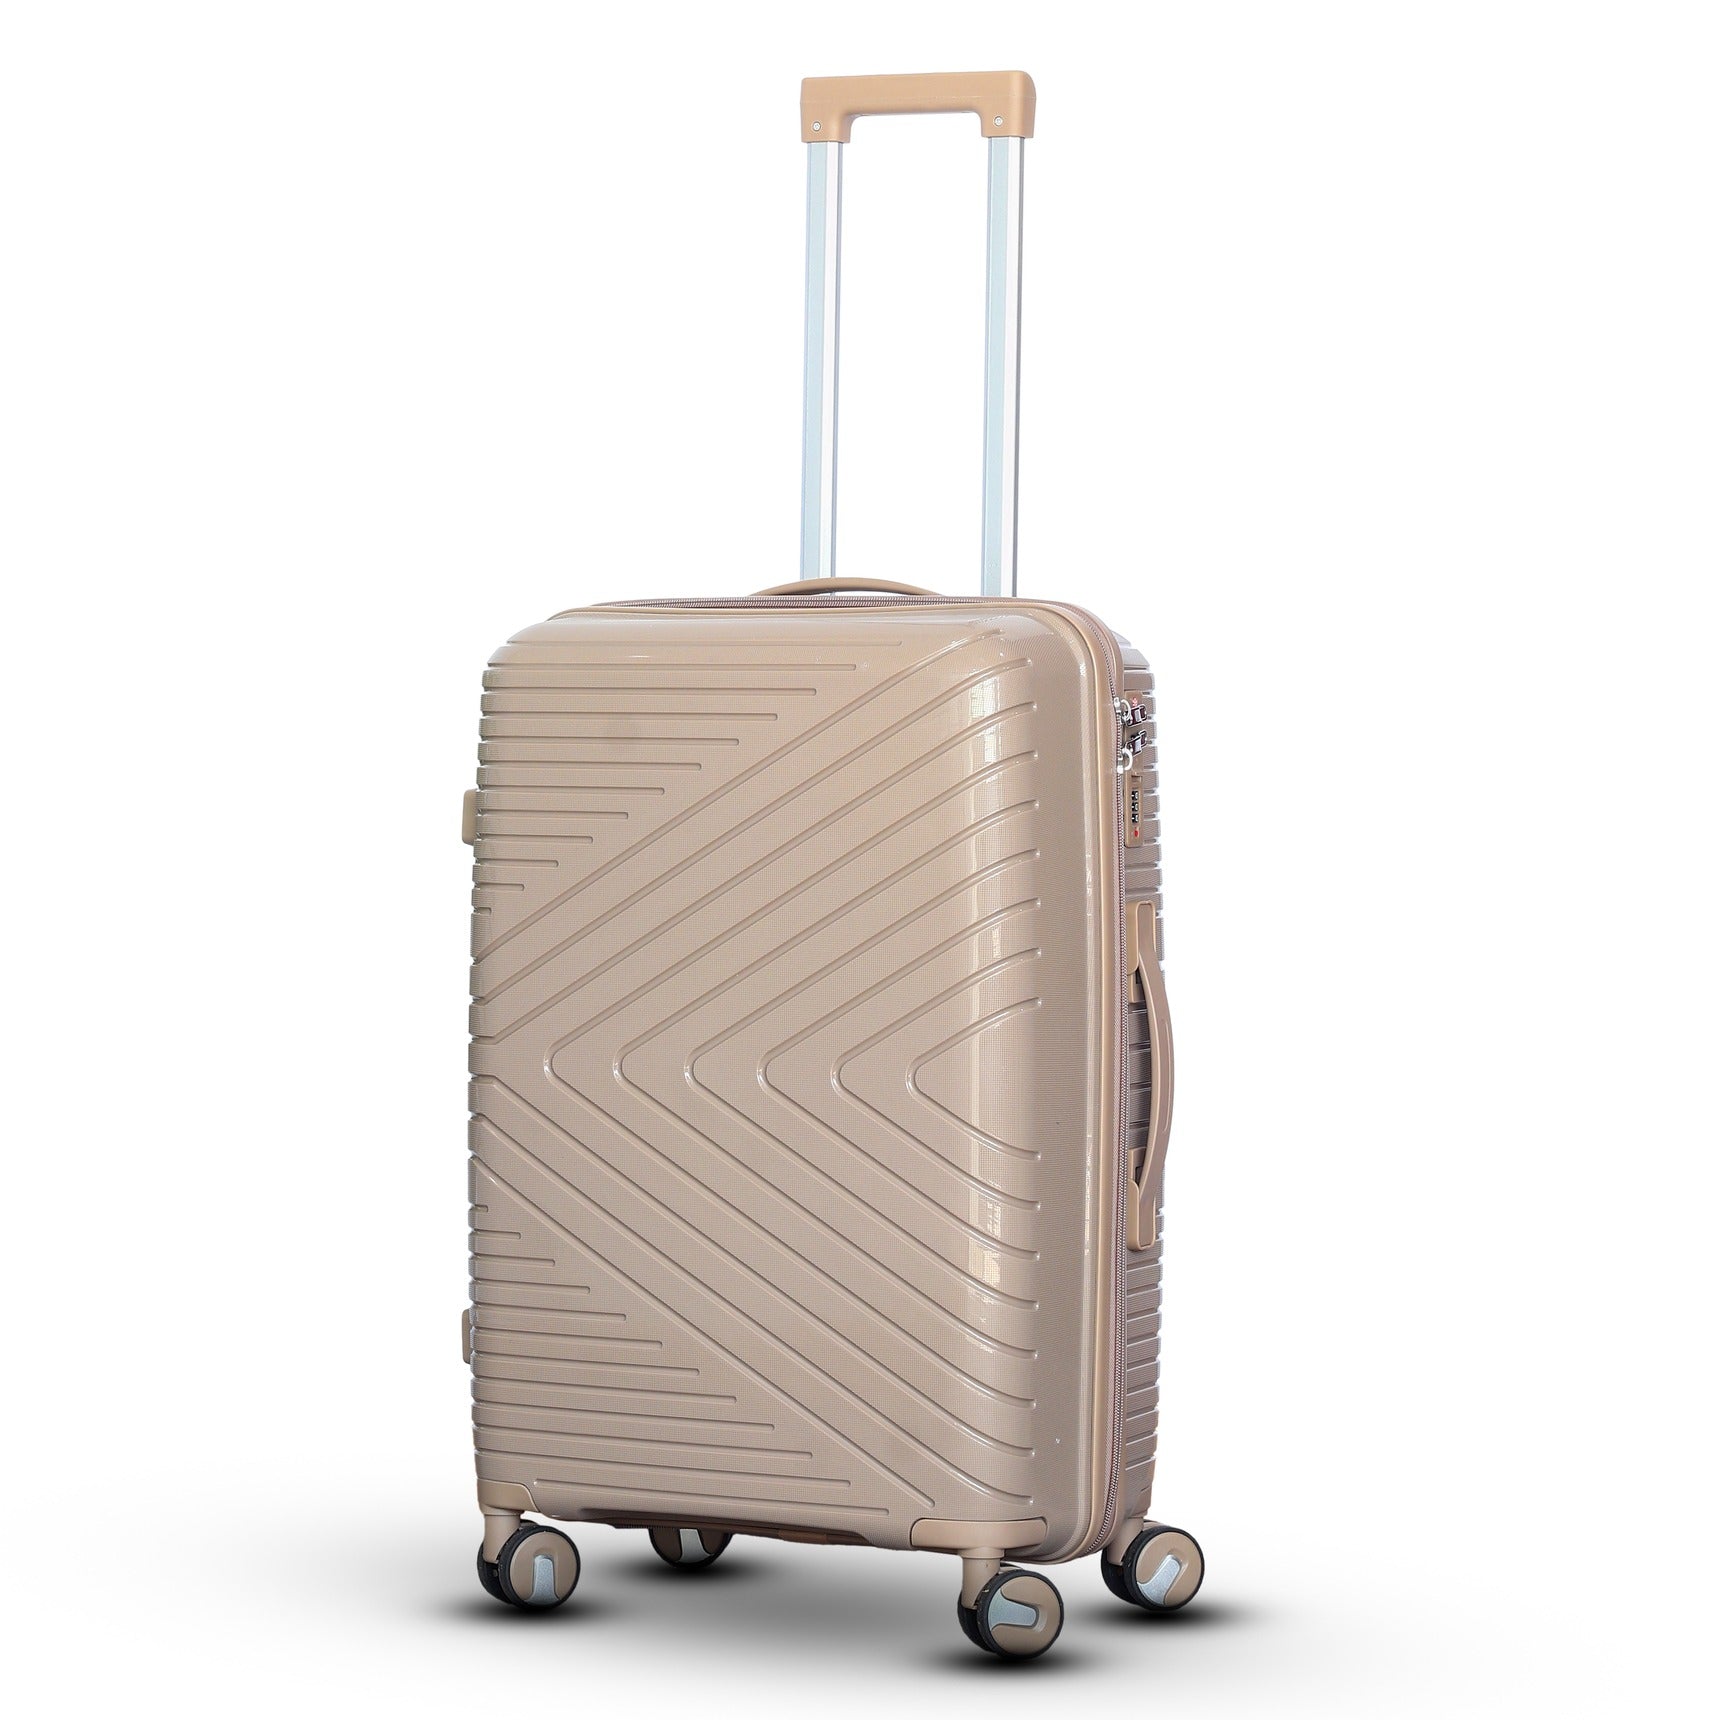 Buy 1 Get 1 Free | Medium Size PP Unbreakable Luggage Bags | 24" Size 20-25 Kg Capacity